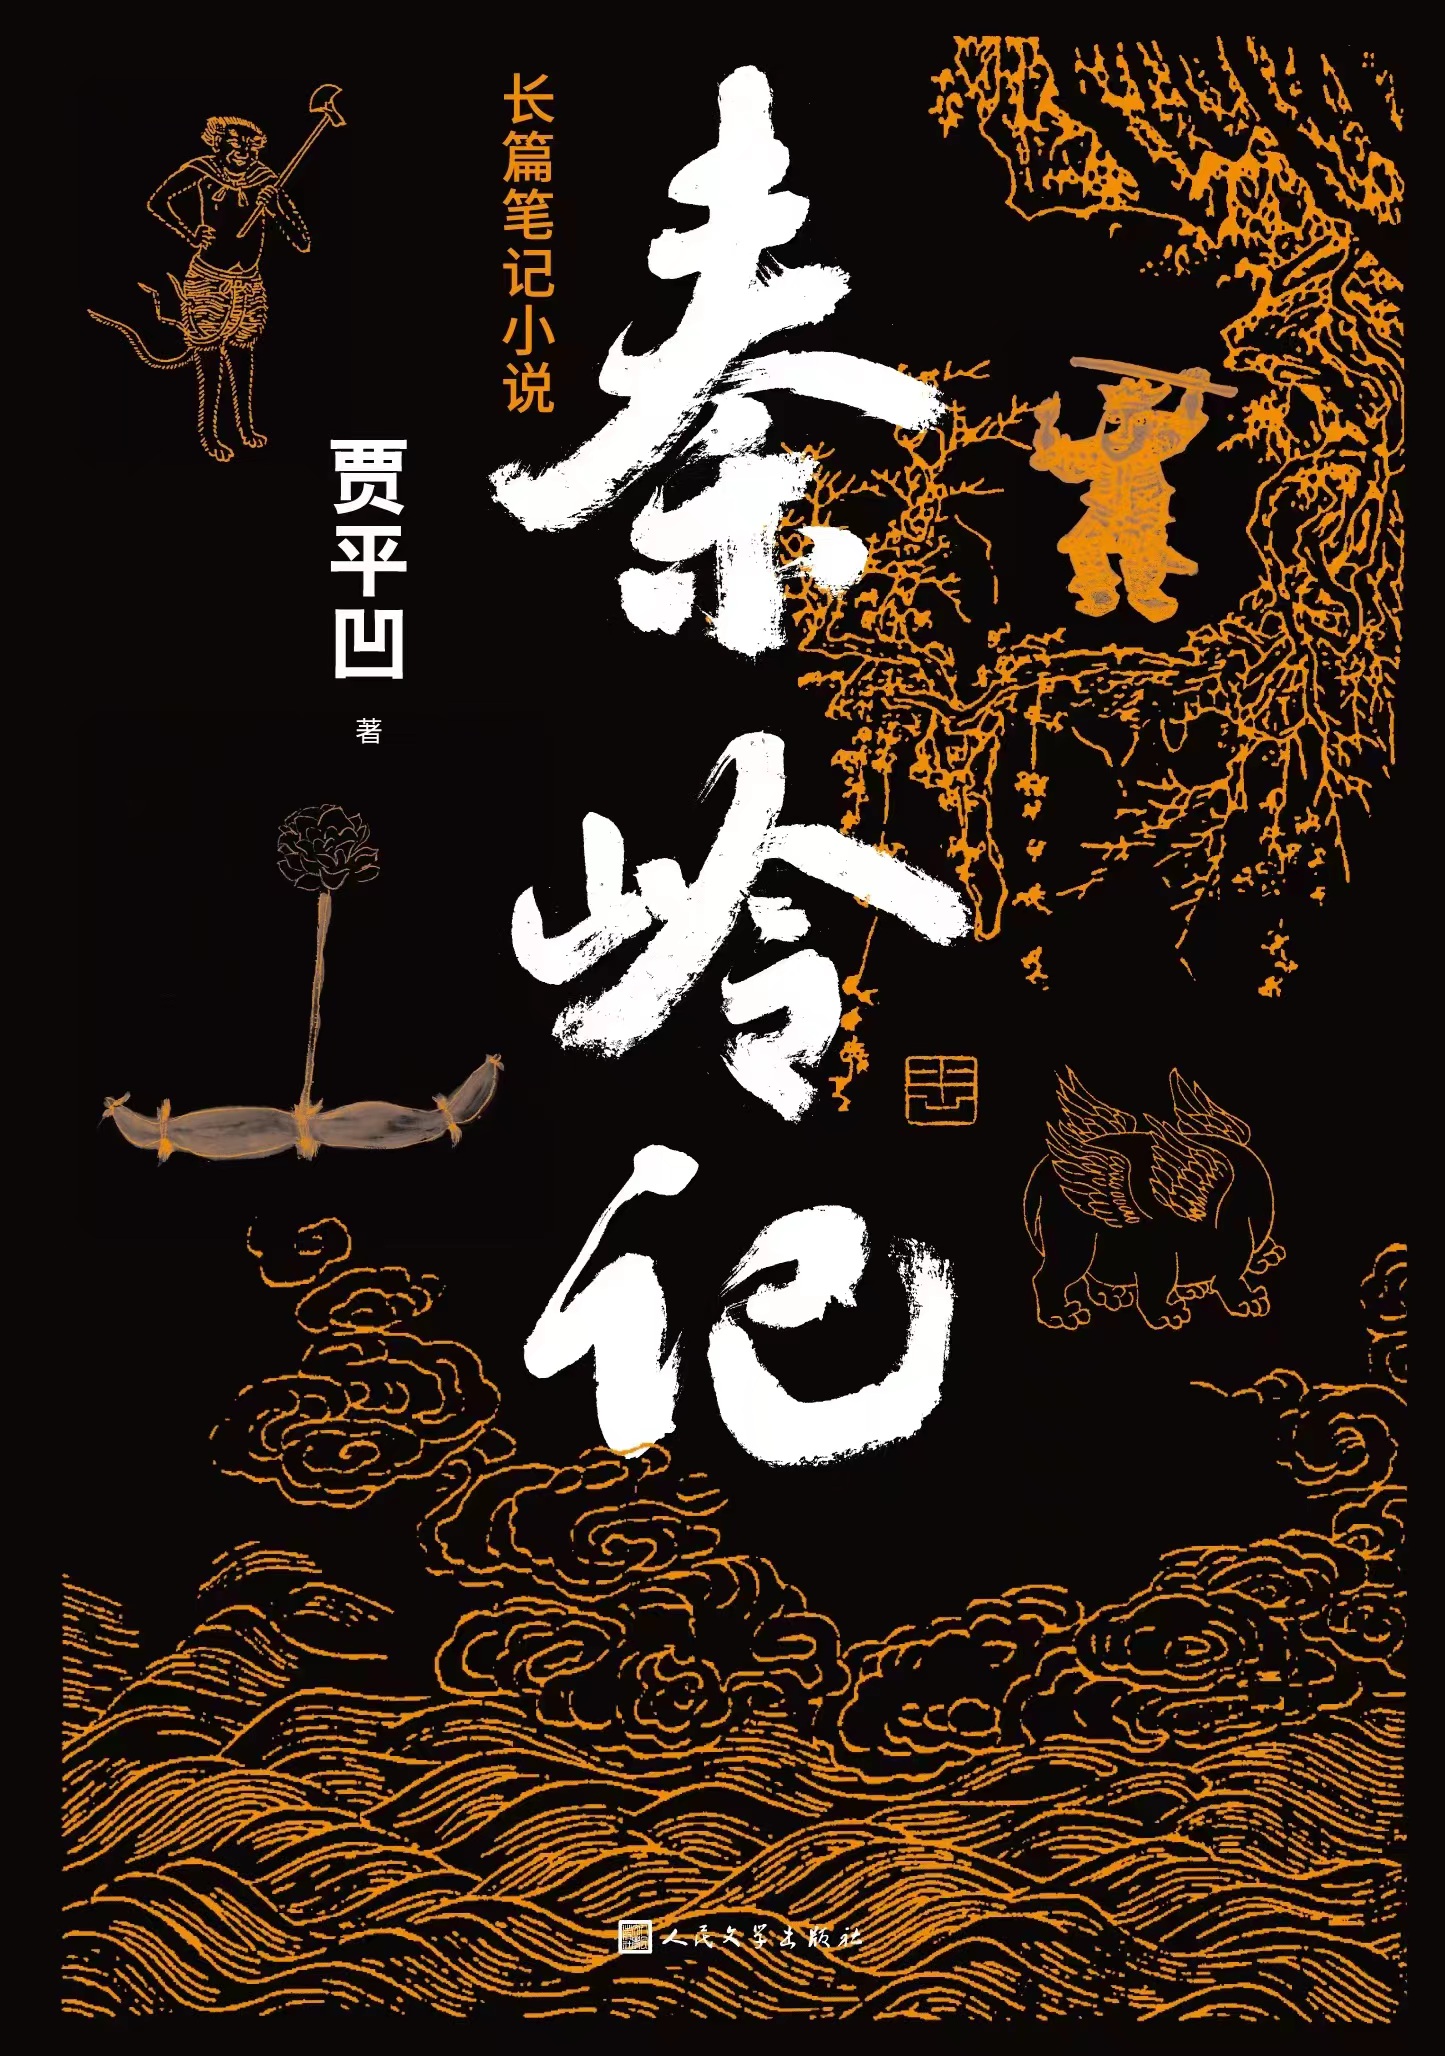 Jia Pingwa's "The Story of Qinling Mountains"